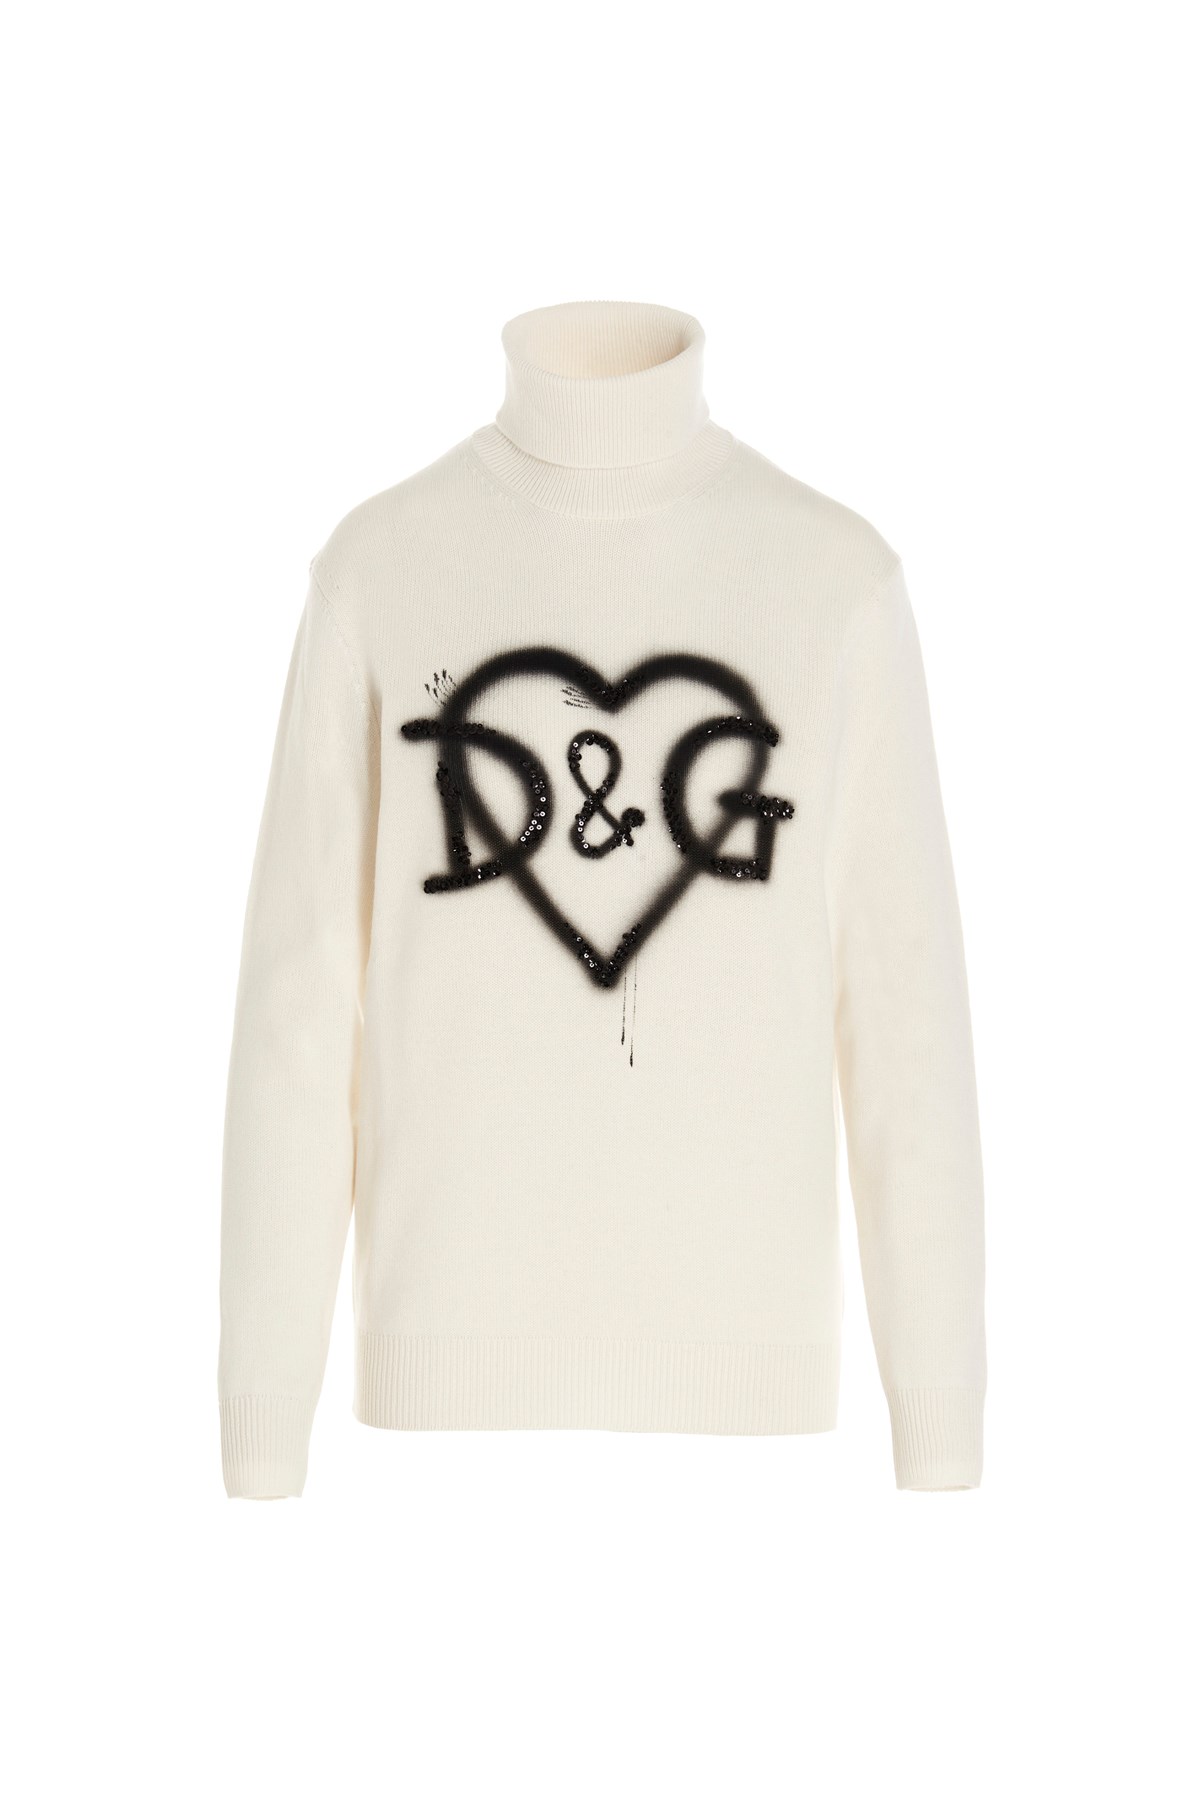 DOLCE & GABBANA 'Dg Next' Logo Sweater